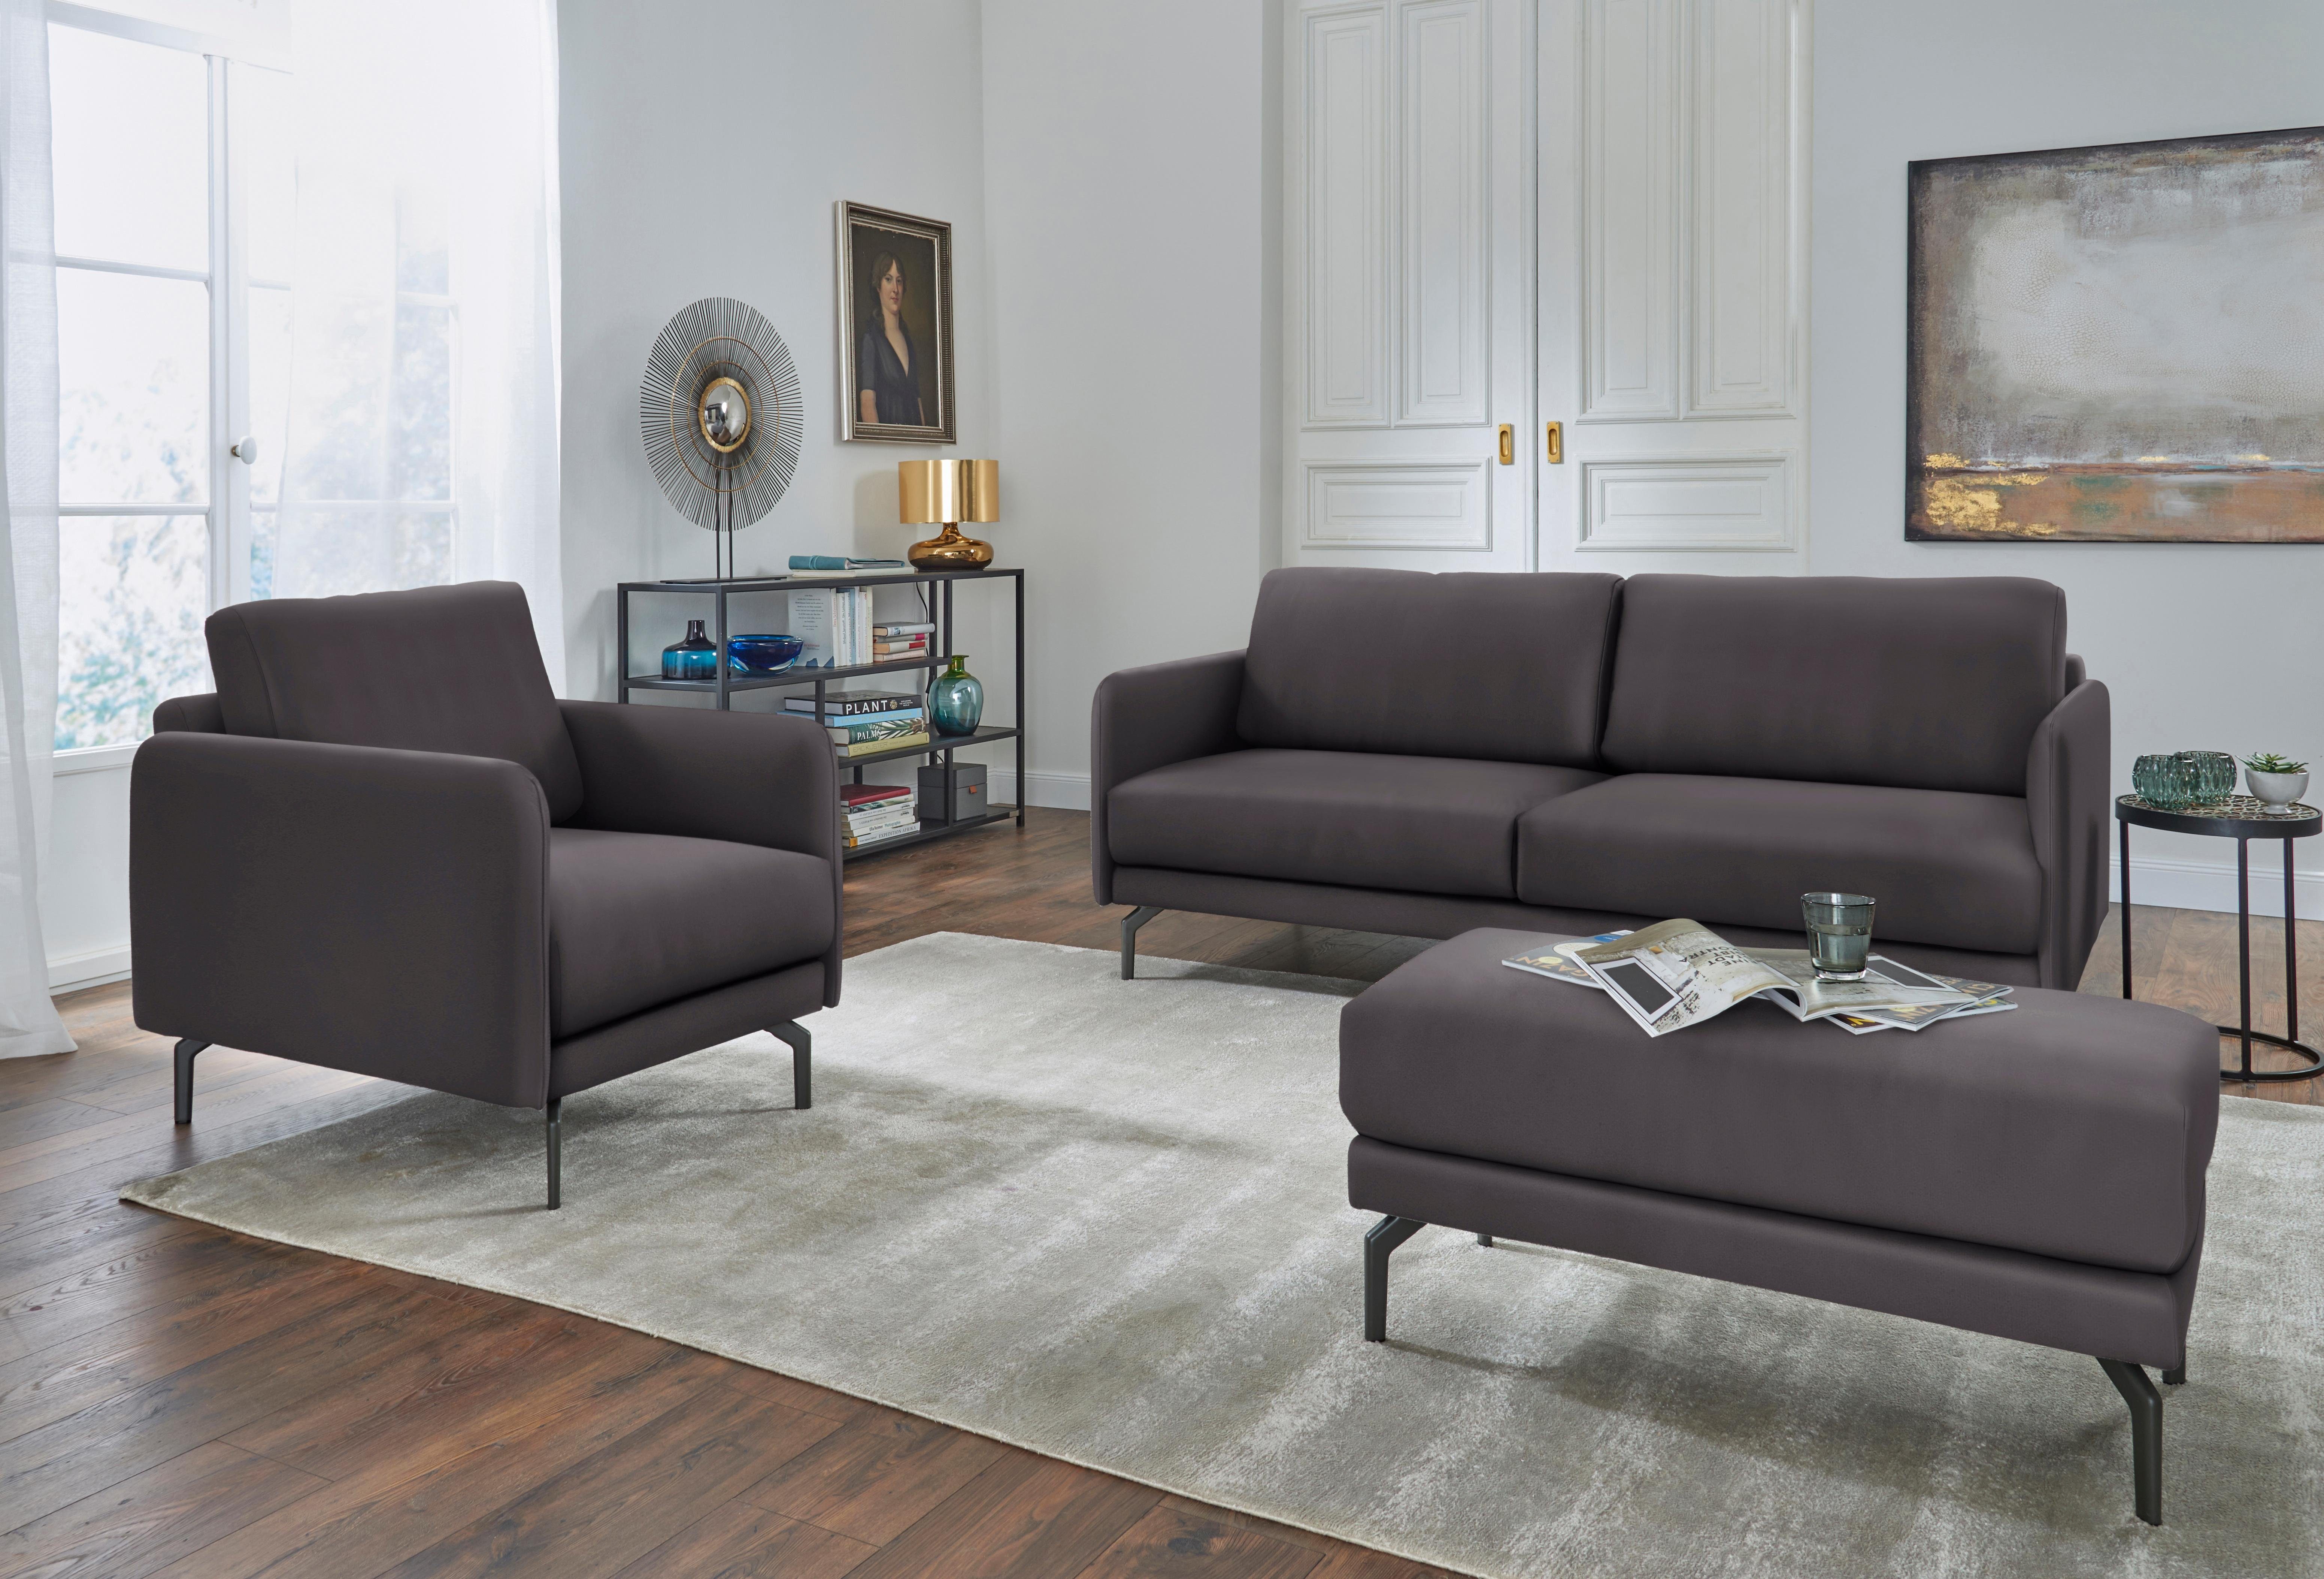 cm, sehr Armlehne Umbragrau sofa hülsta 190 schmal, Breite hs.450, Alugussfuß 3-Sitzer